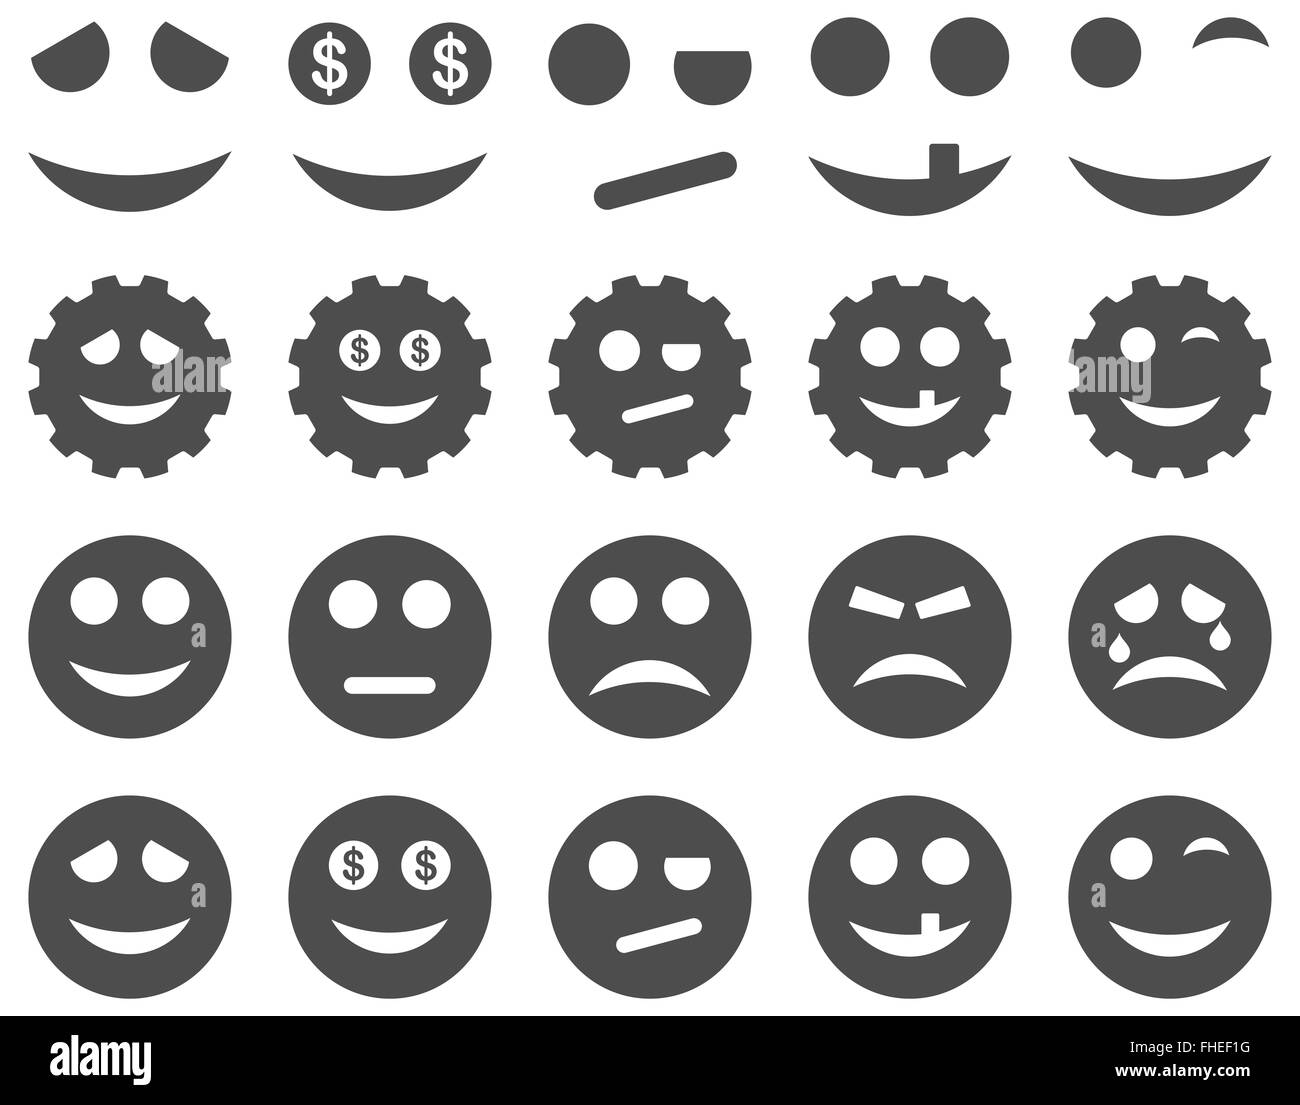 Smiley emoticon facial expression neutral Black and White Stock Photos ...